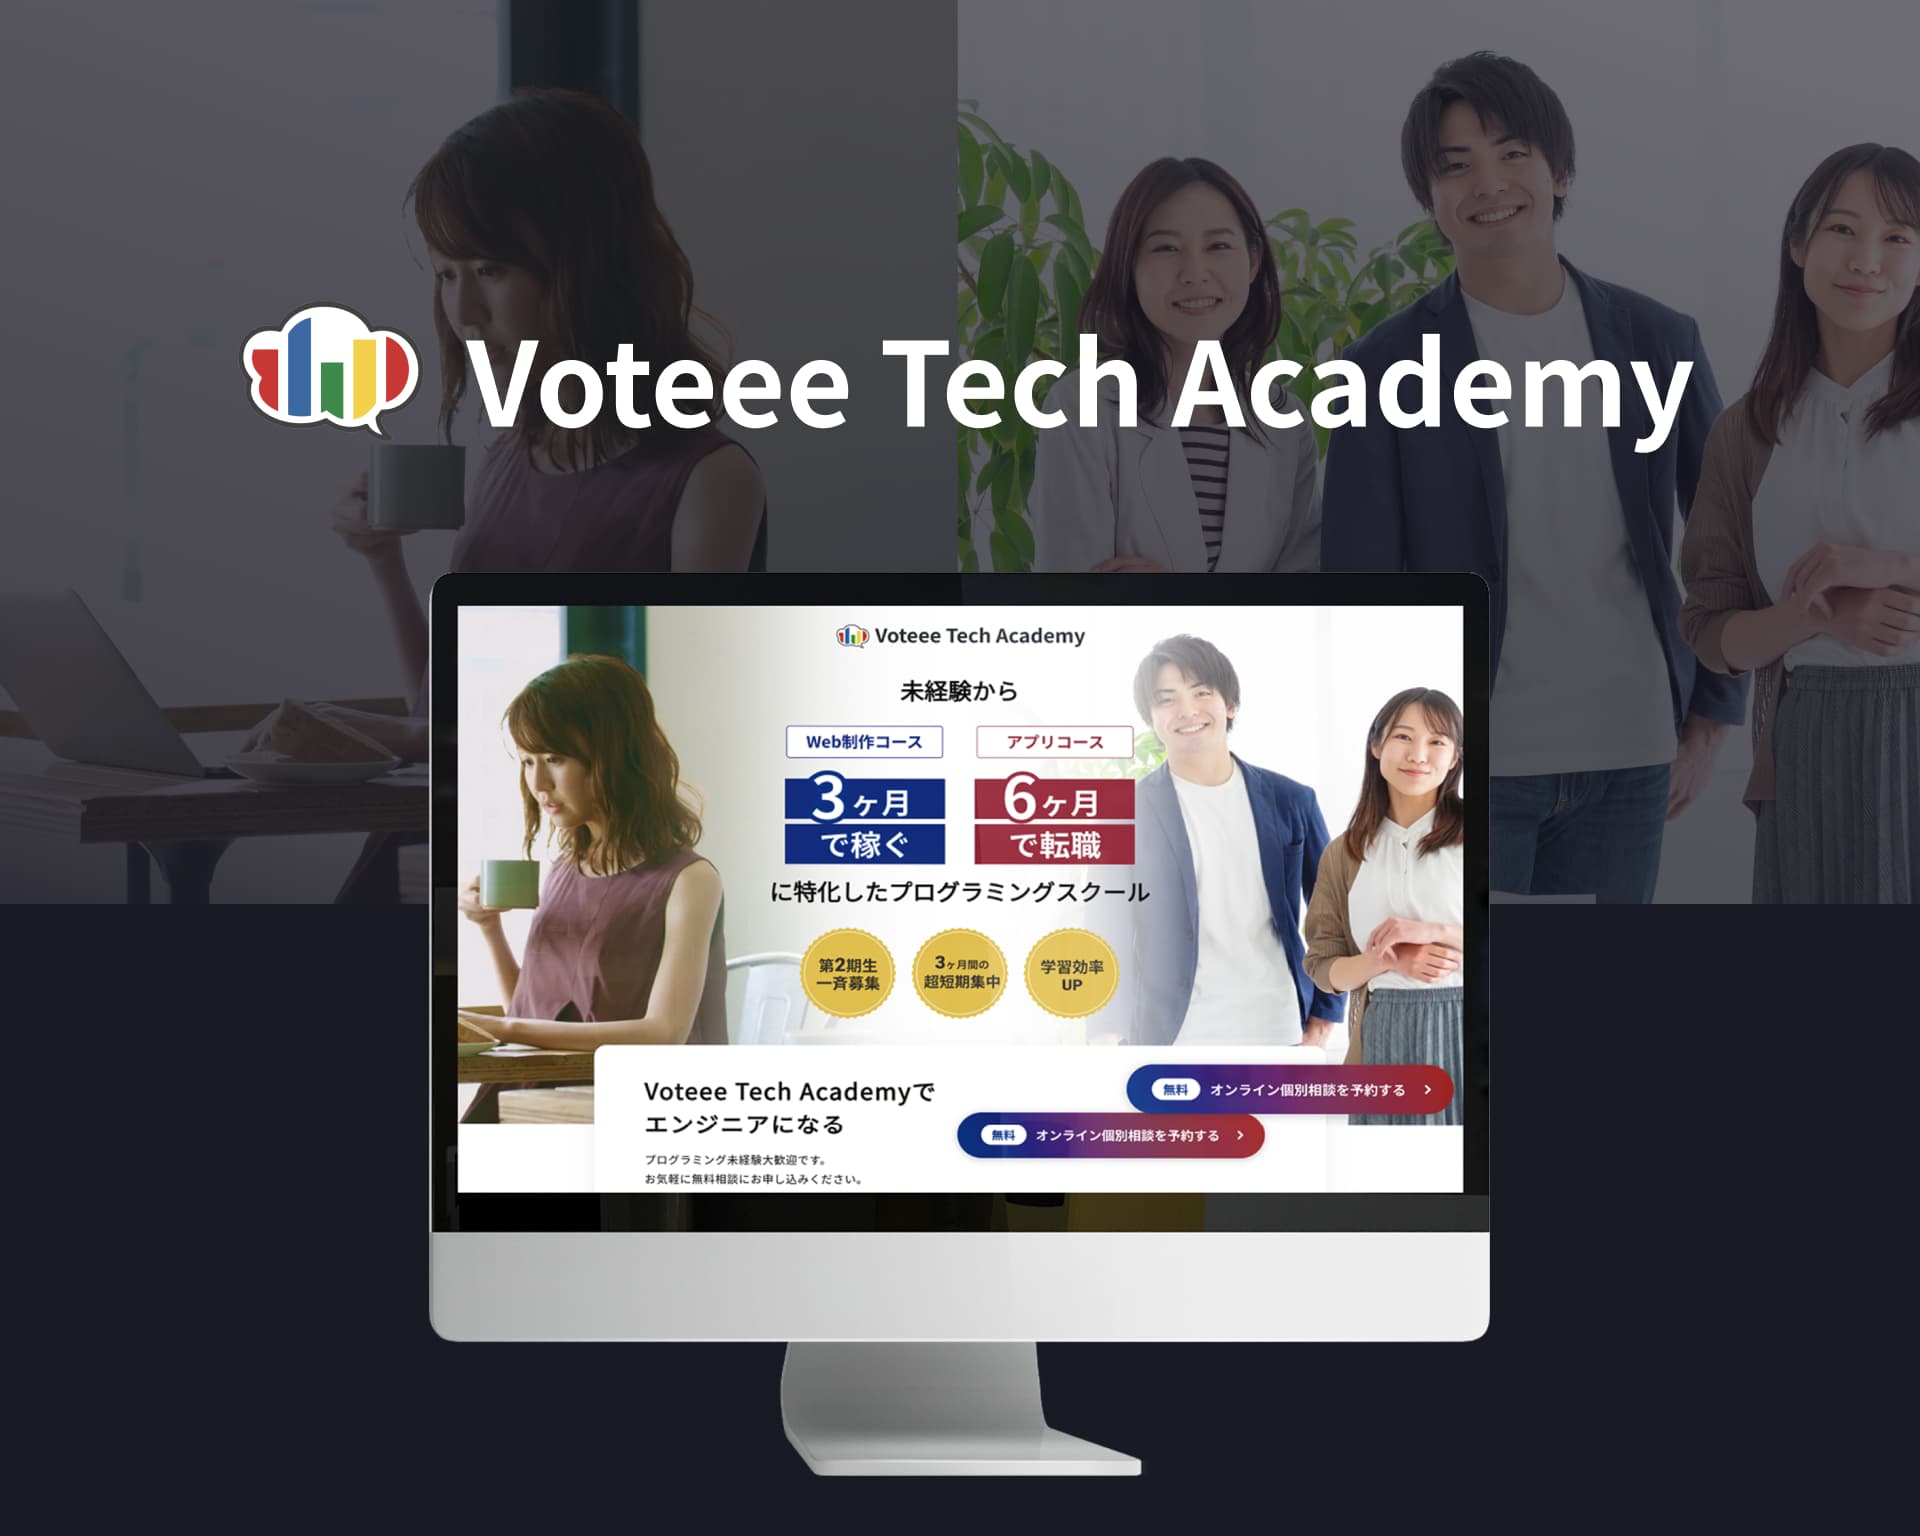 Voteee Tech Academy